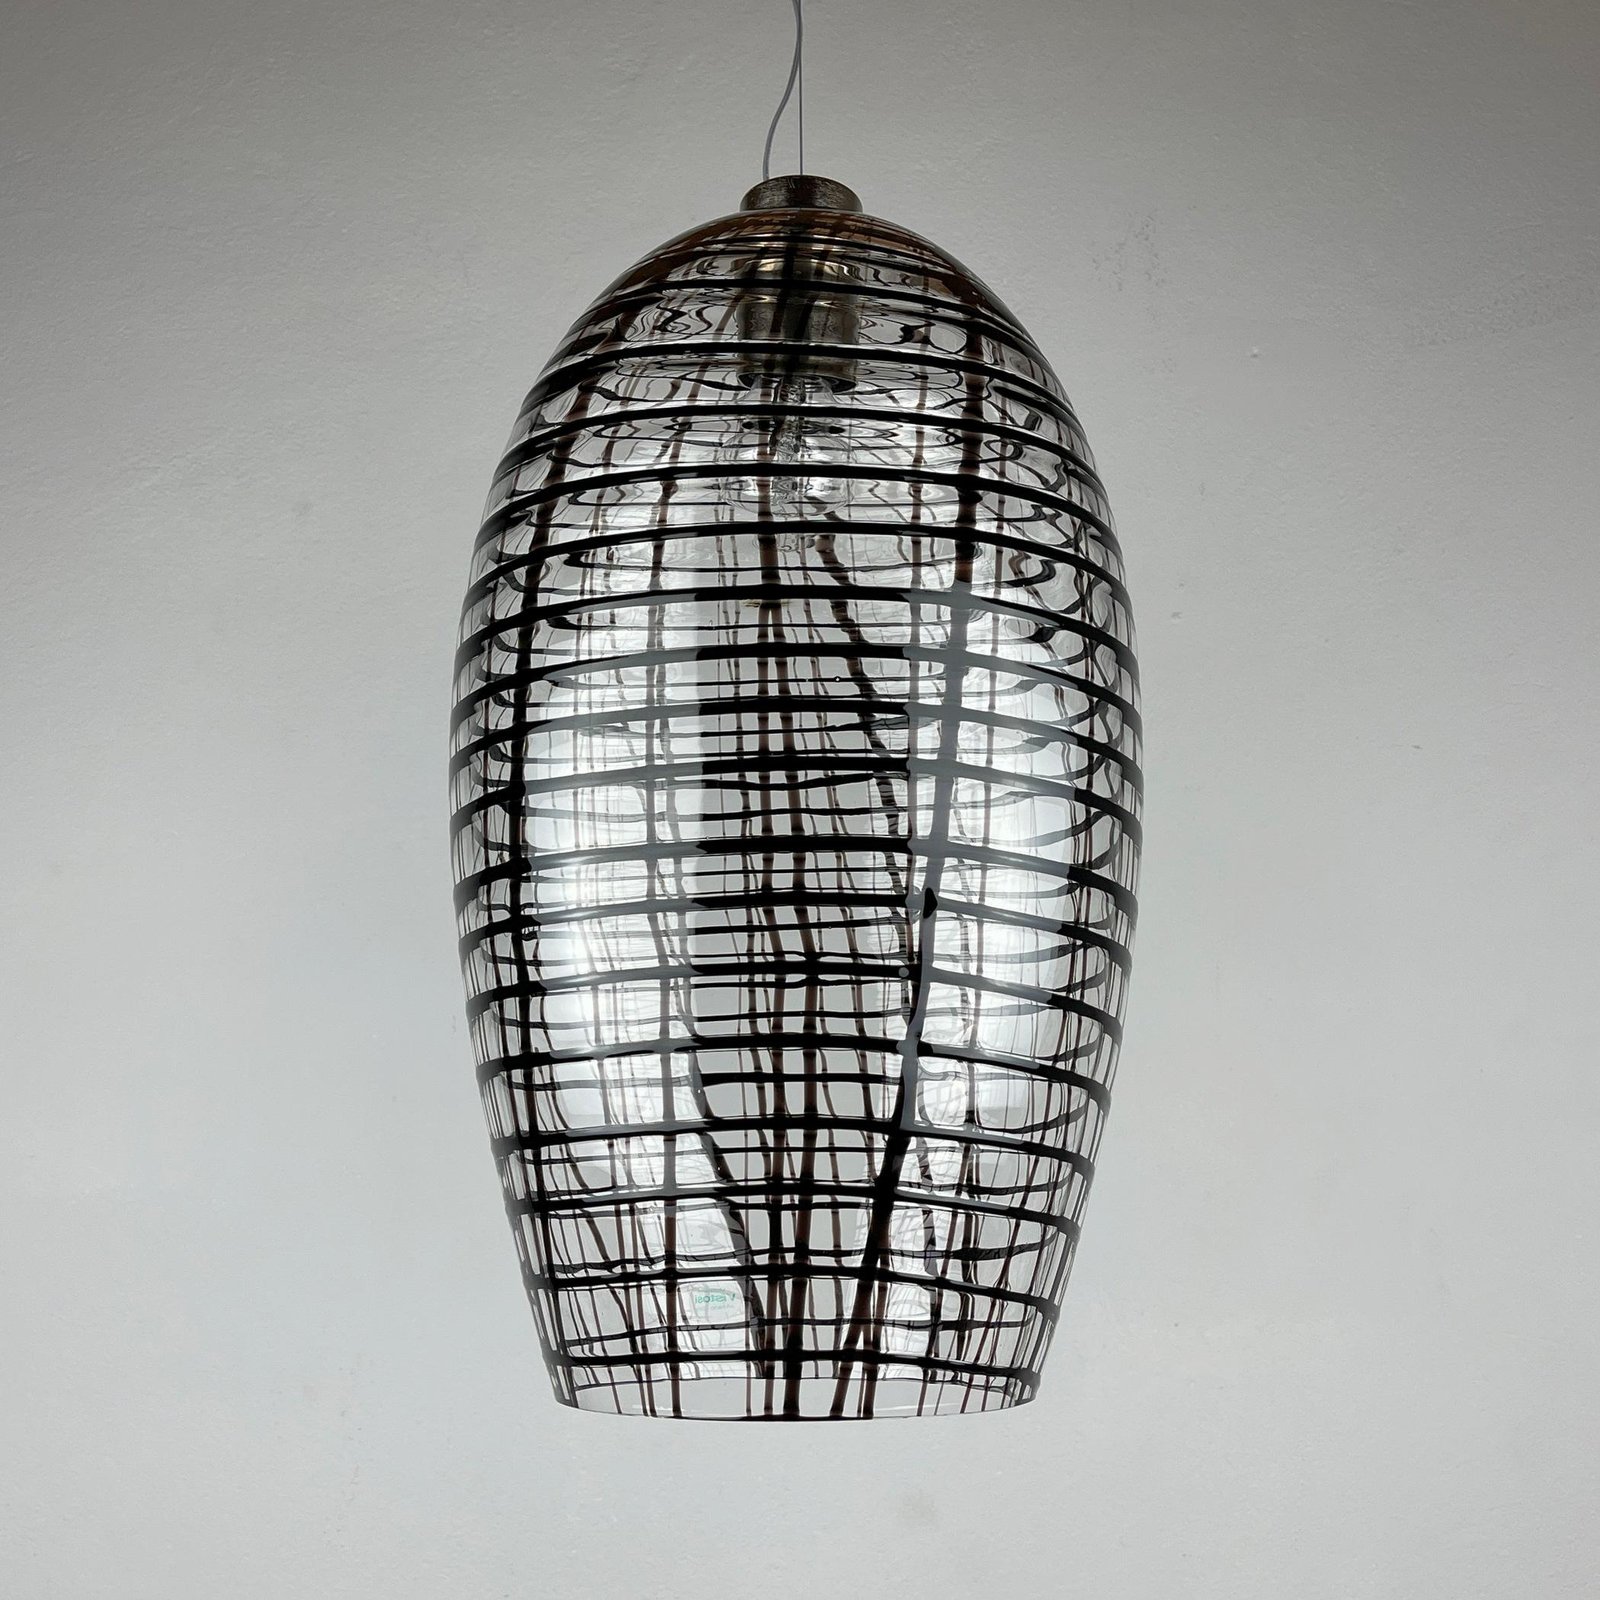 Pendant lamp Yuba by designer Paolo Crepax for Vistosi Italy 2003